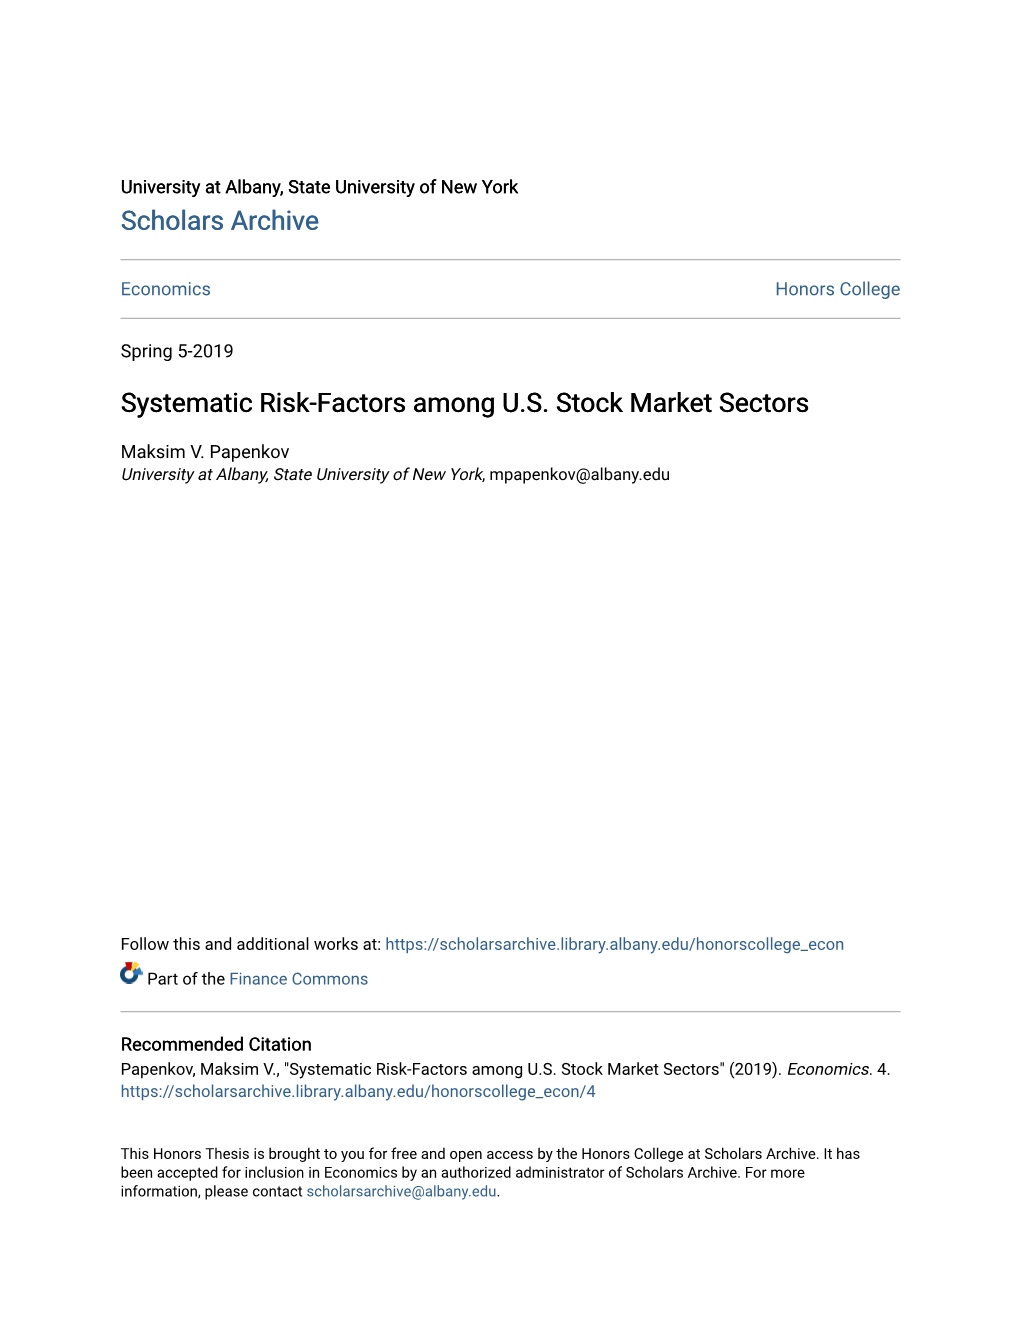 Systematic Risk-Factors Among U.S. Stock Market Sectors